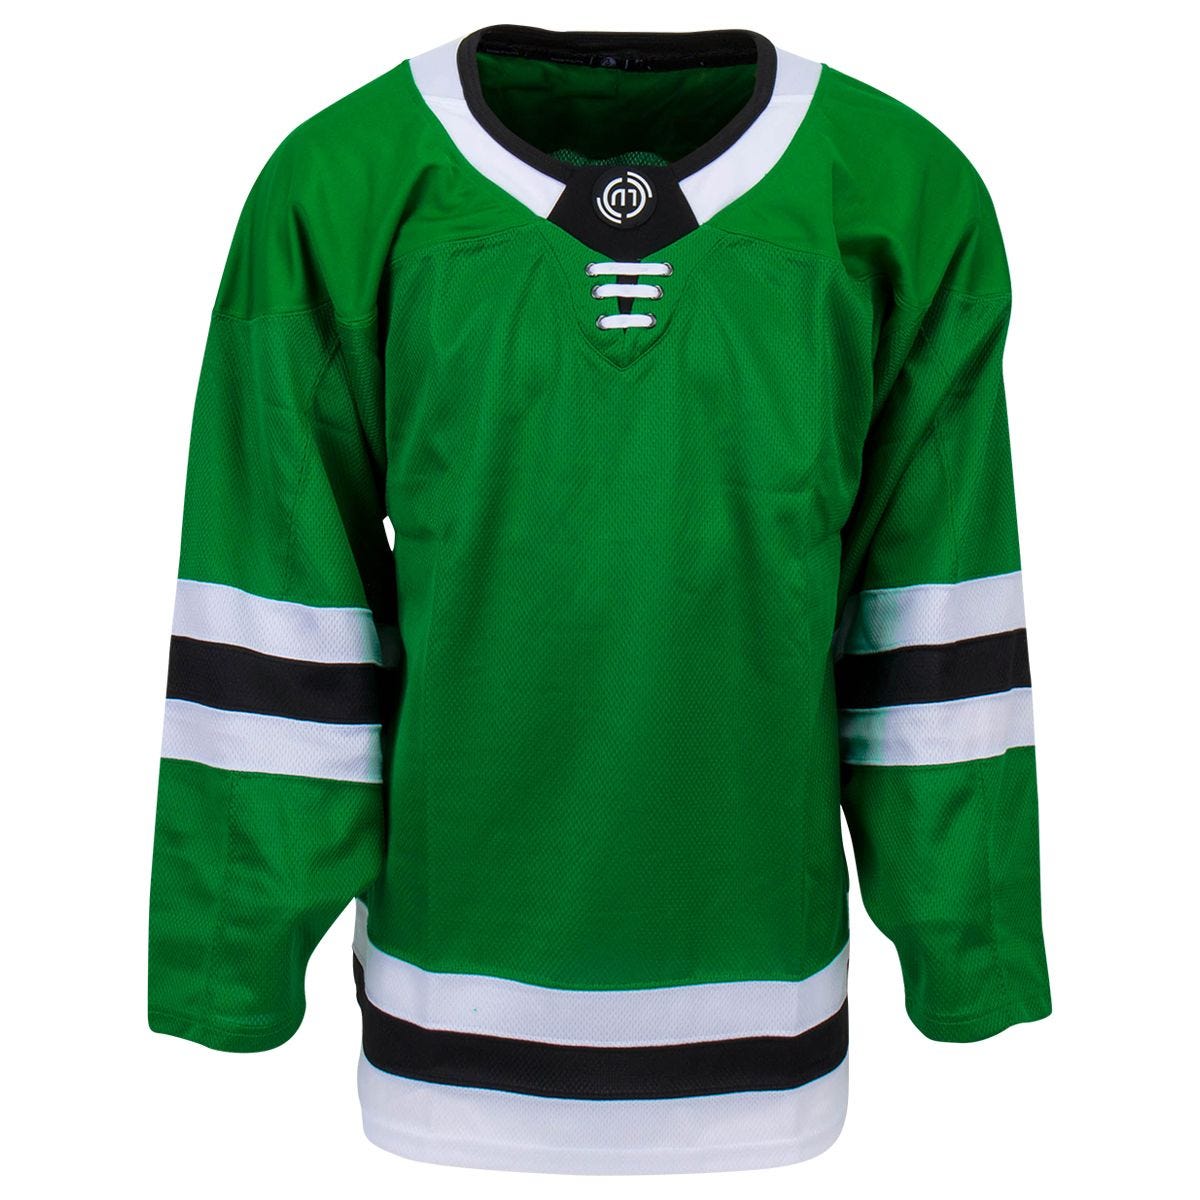 Monkeysports Dallas Stars Uncrested Junior Hockey Jersey in Green Size Small/Medium